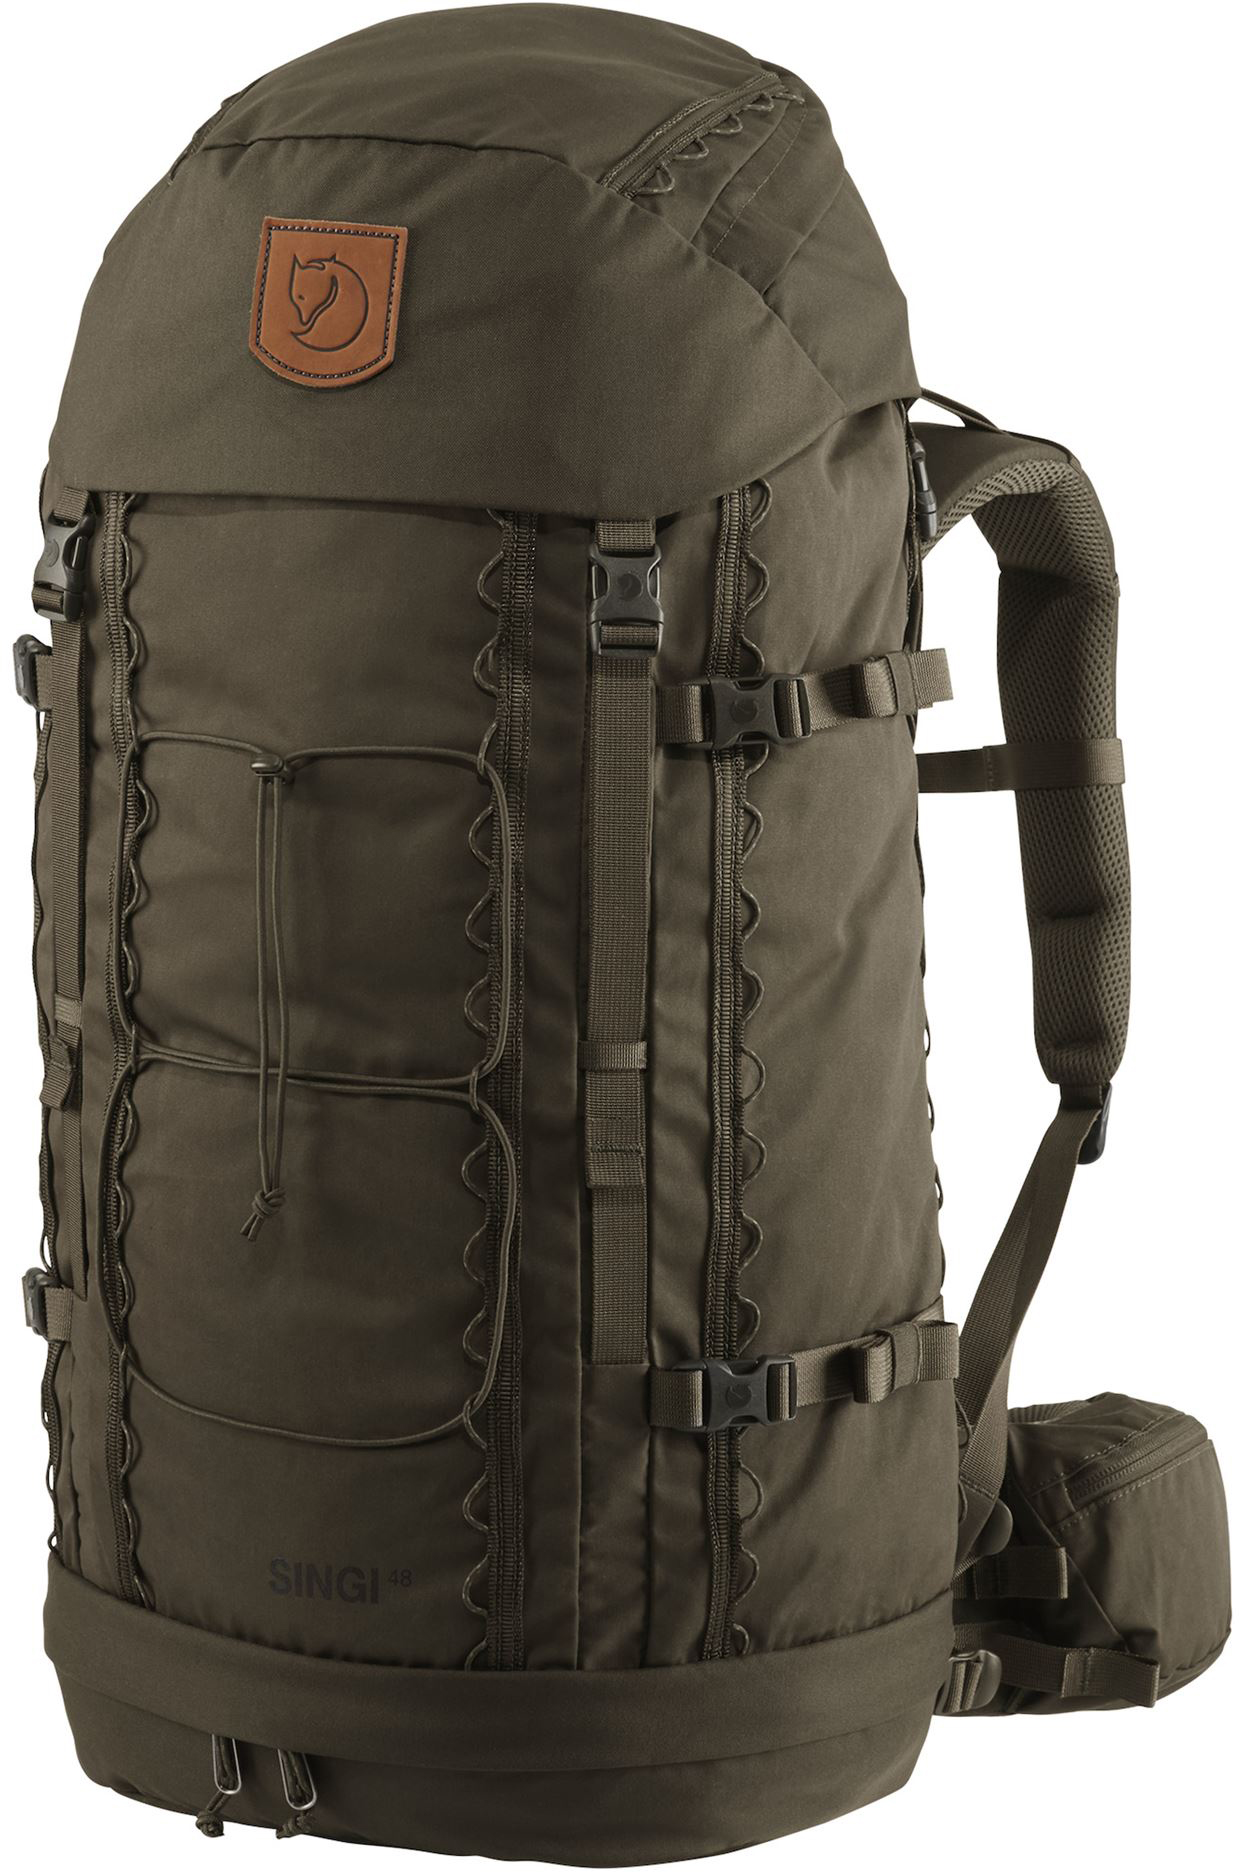 Fjallraven Singi 48 Backpack | Backpacking Packs CampSaver.com